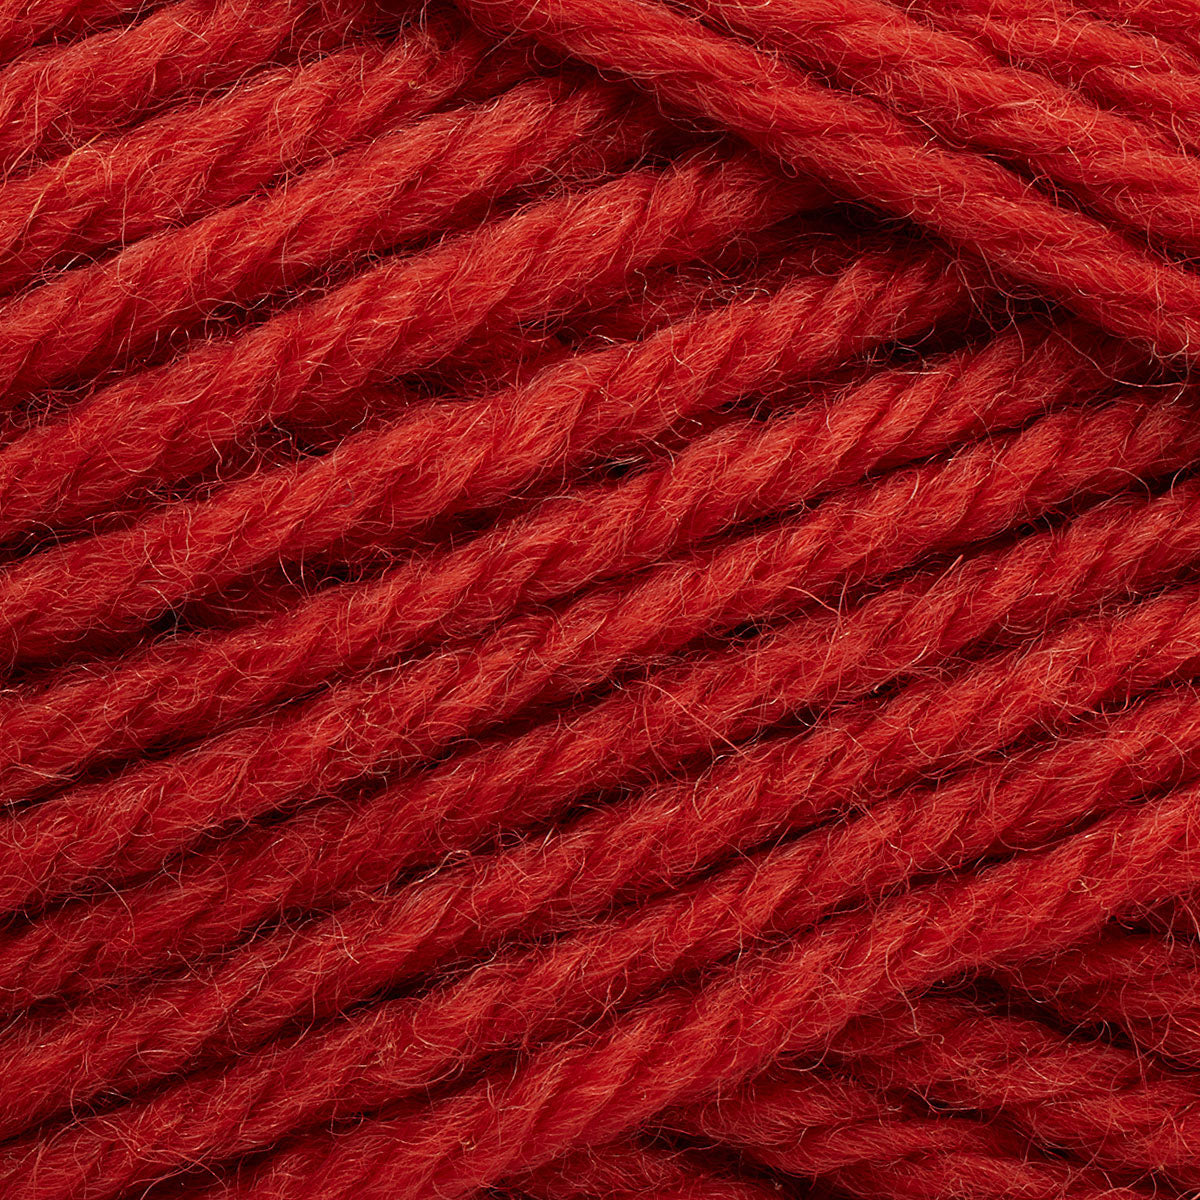 Peruvian Highland Wool tile [256]